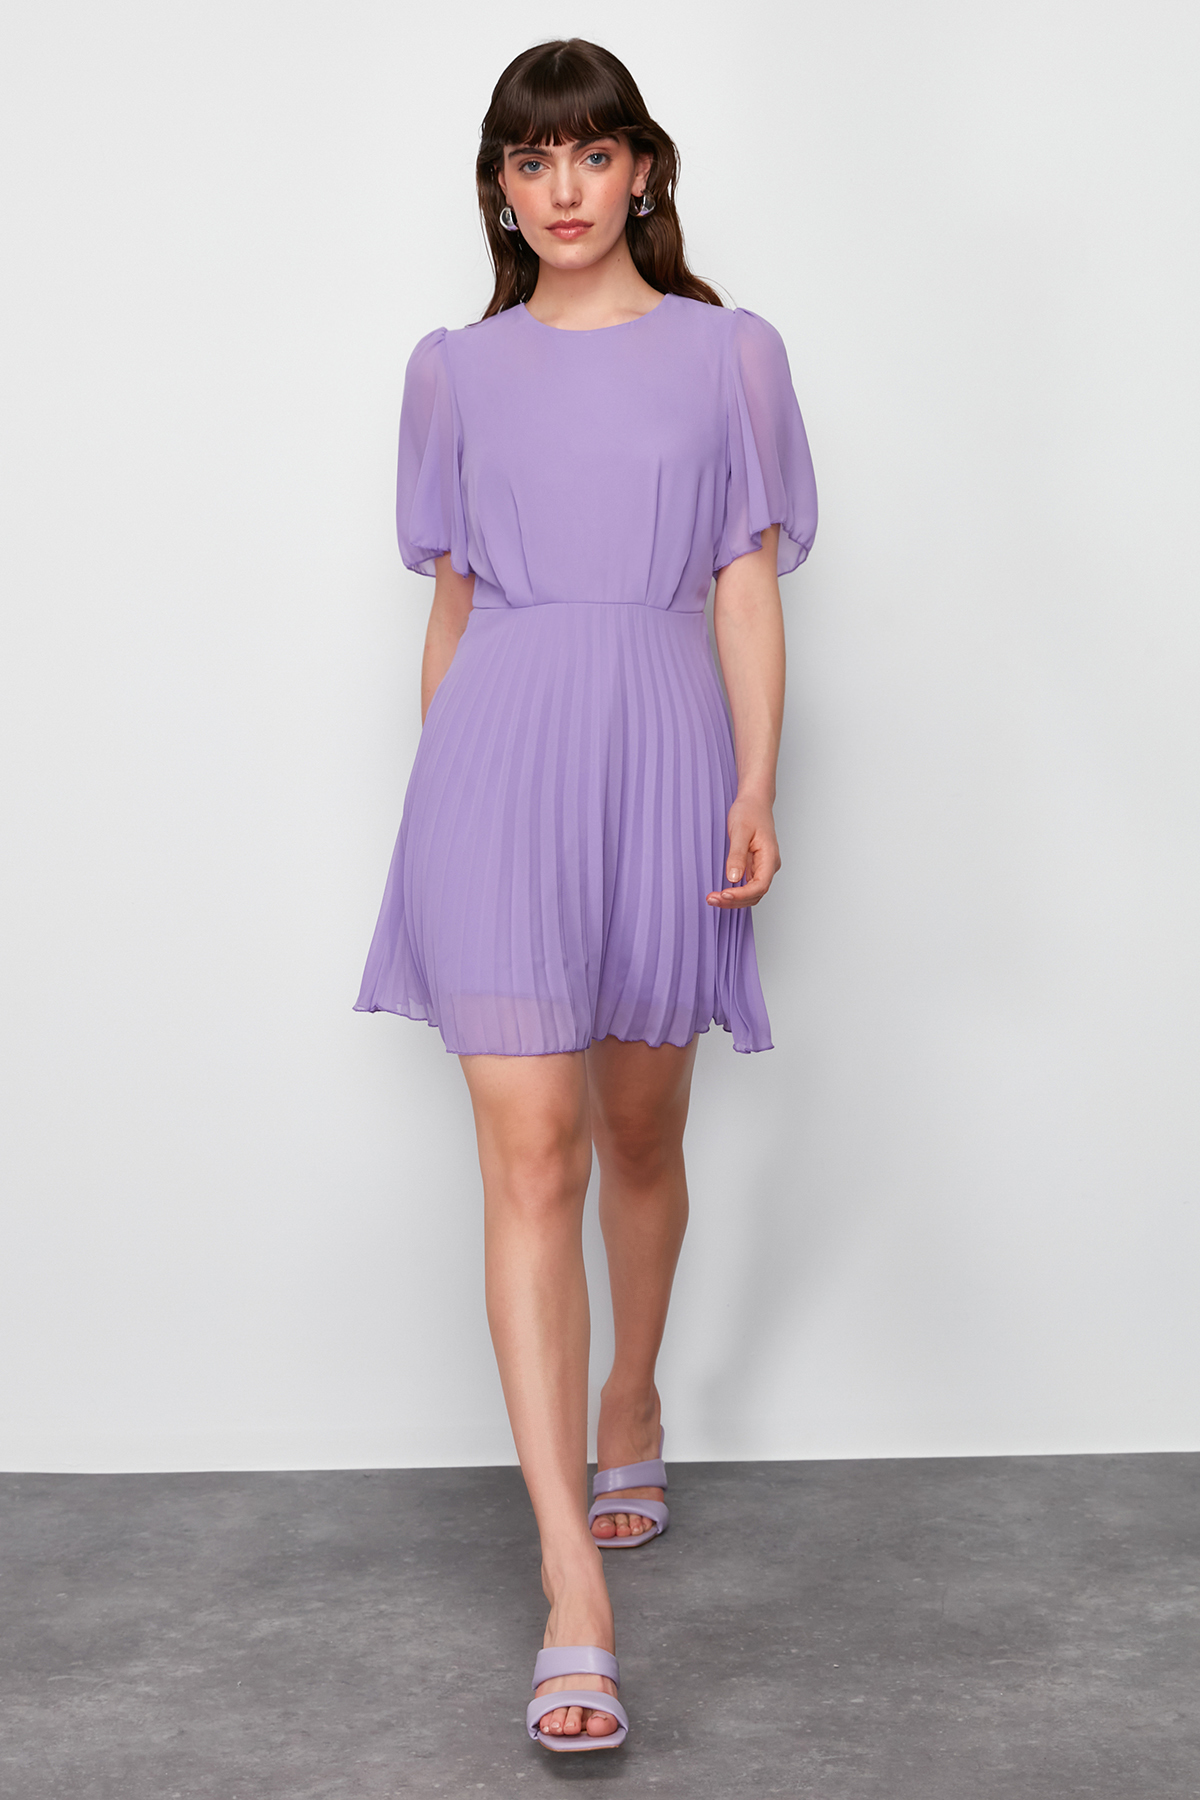 Trendyol Purple Skirt Pleated Lined Chiffon Mini Woven Dress